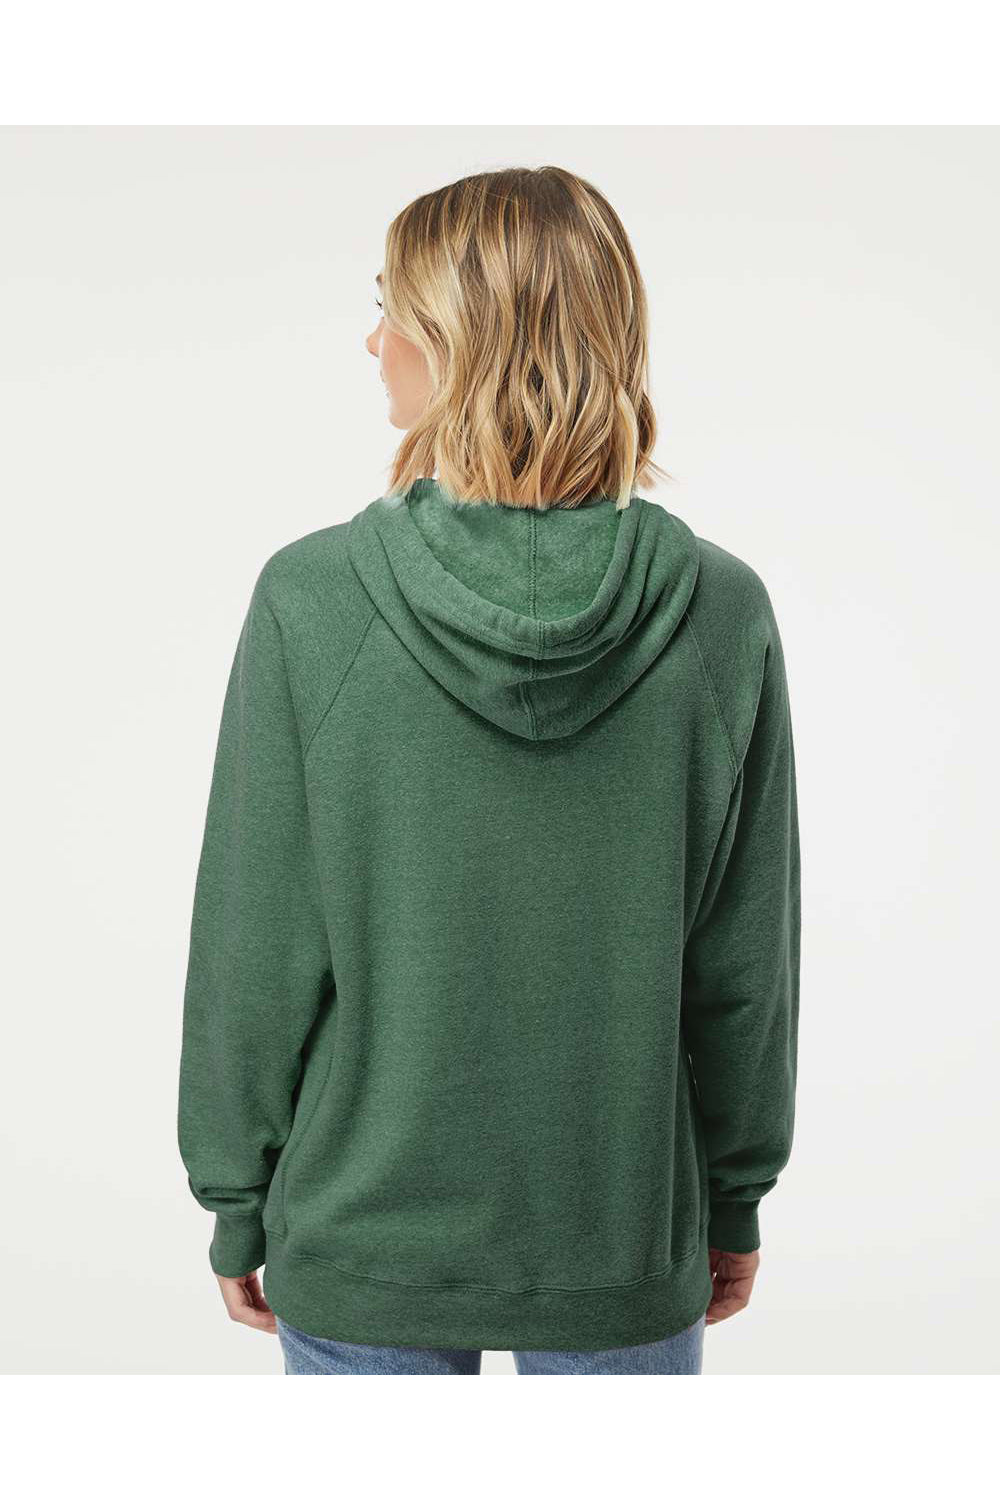 Independent Trading Co. PRM33SBP Mens Special Blend Raglan Hooded Sweatshirt Hoodie Moss Green Model Back